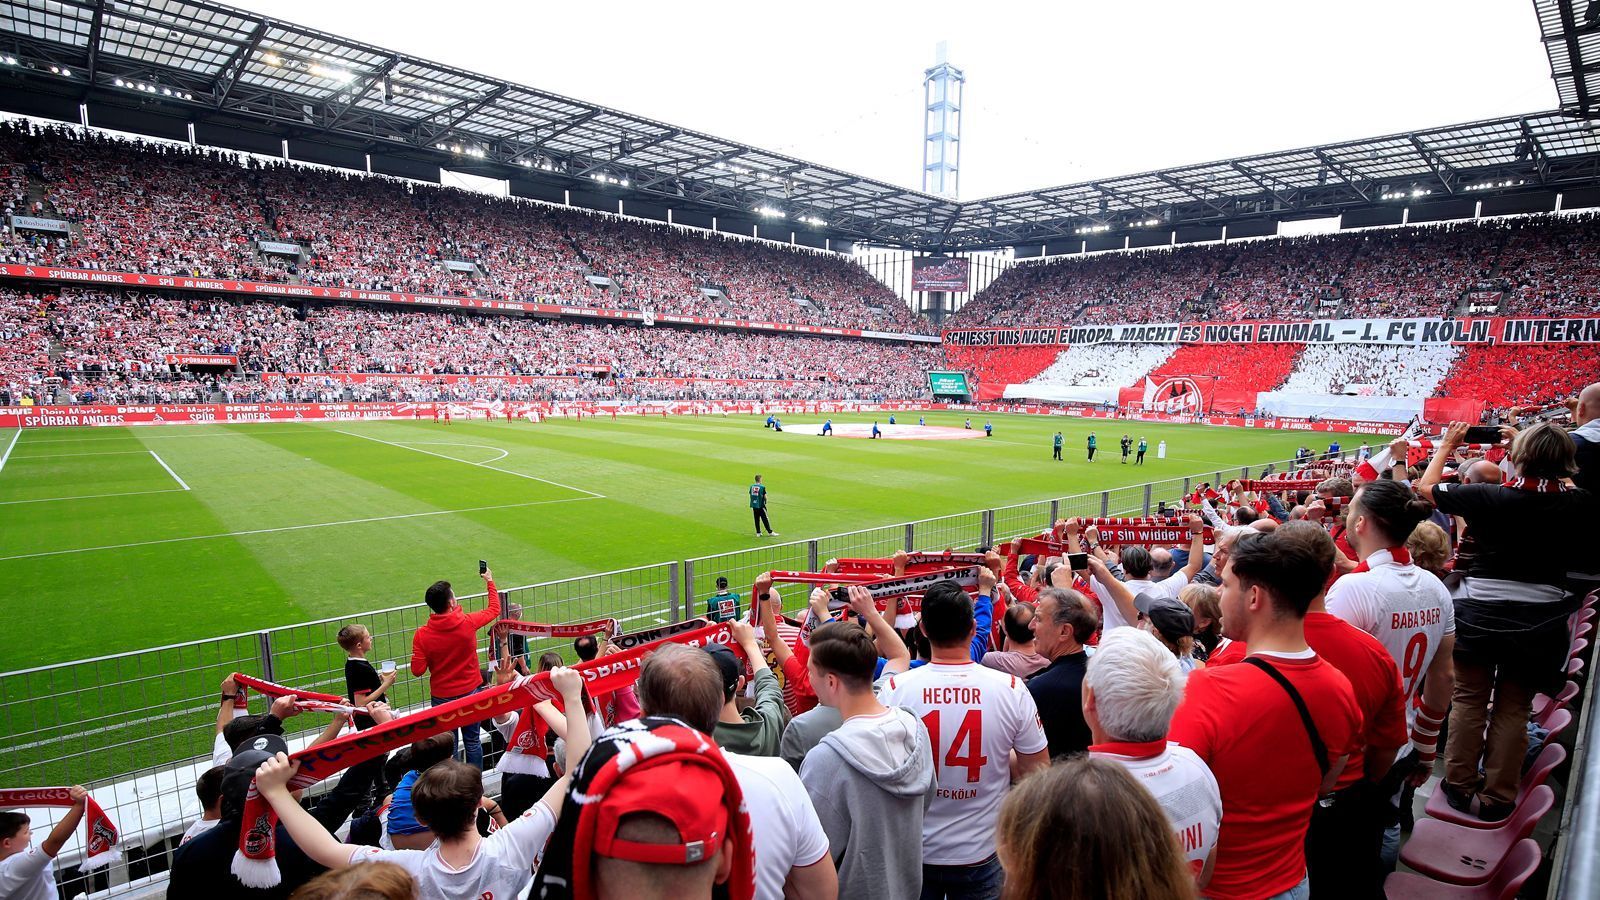 
                <strong>Platz 7: 1. FC Köln</strong><br>
                Stehplatz: 203 Euro (Mitglieder: 187 Euro) - vergangene Saison: 165 EuroTeuerste Sitzplatzkategorie: 910 Euro ((ligaweit Platz 3) Mitglieder: 852 Euro) - vergangene Saison: 795 Euro
              